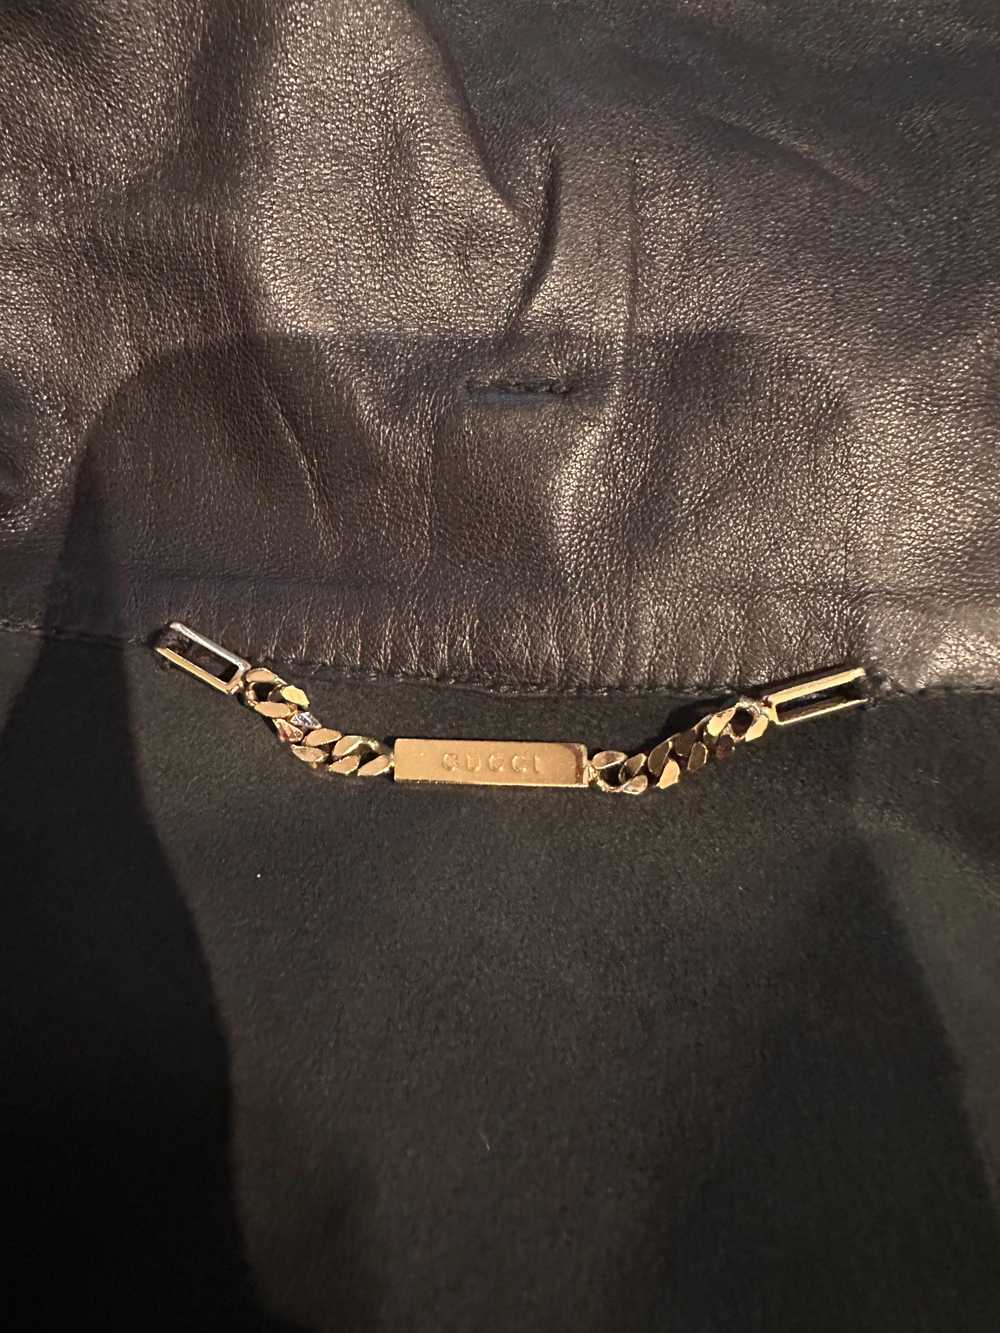 Product Details Gucci Black Leather Bomber Jacket - image 5